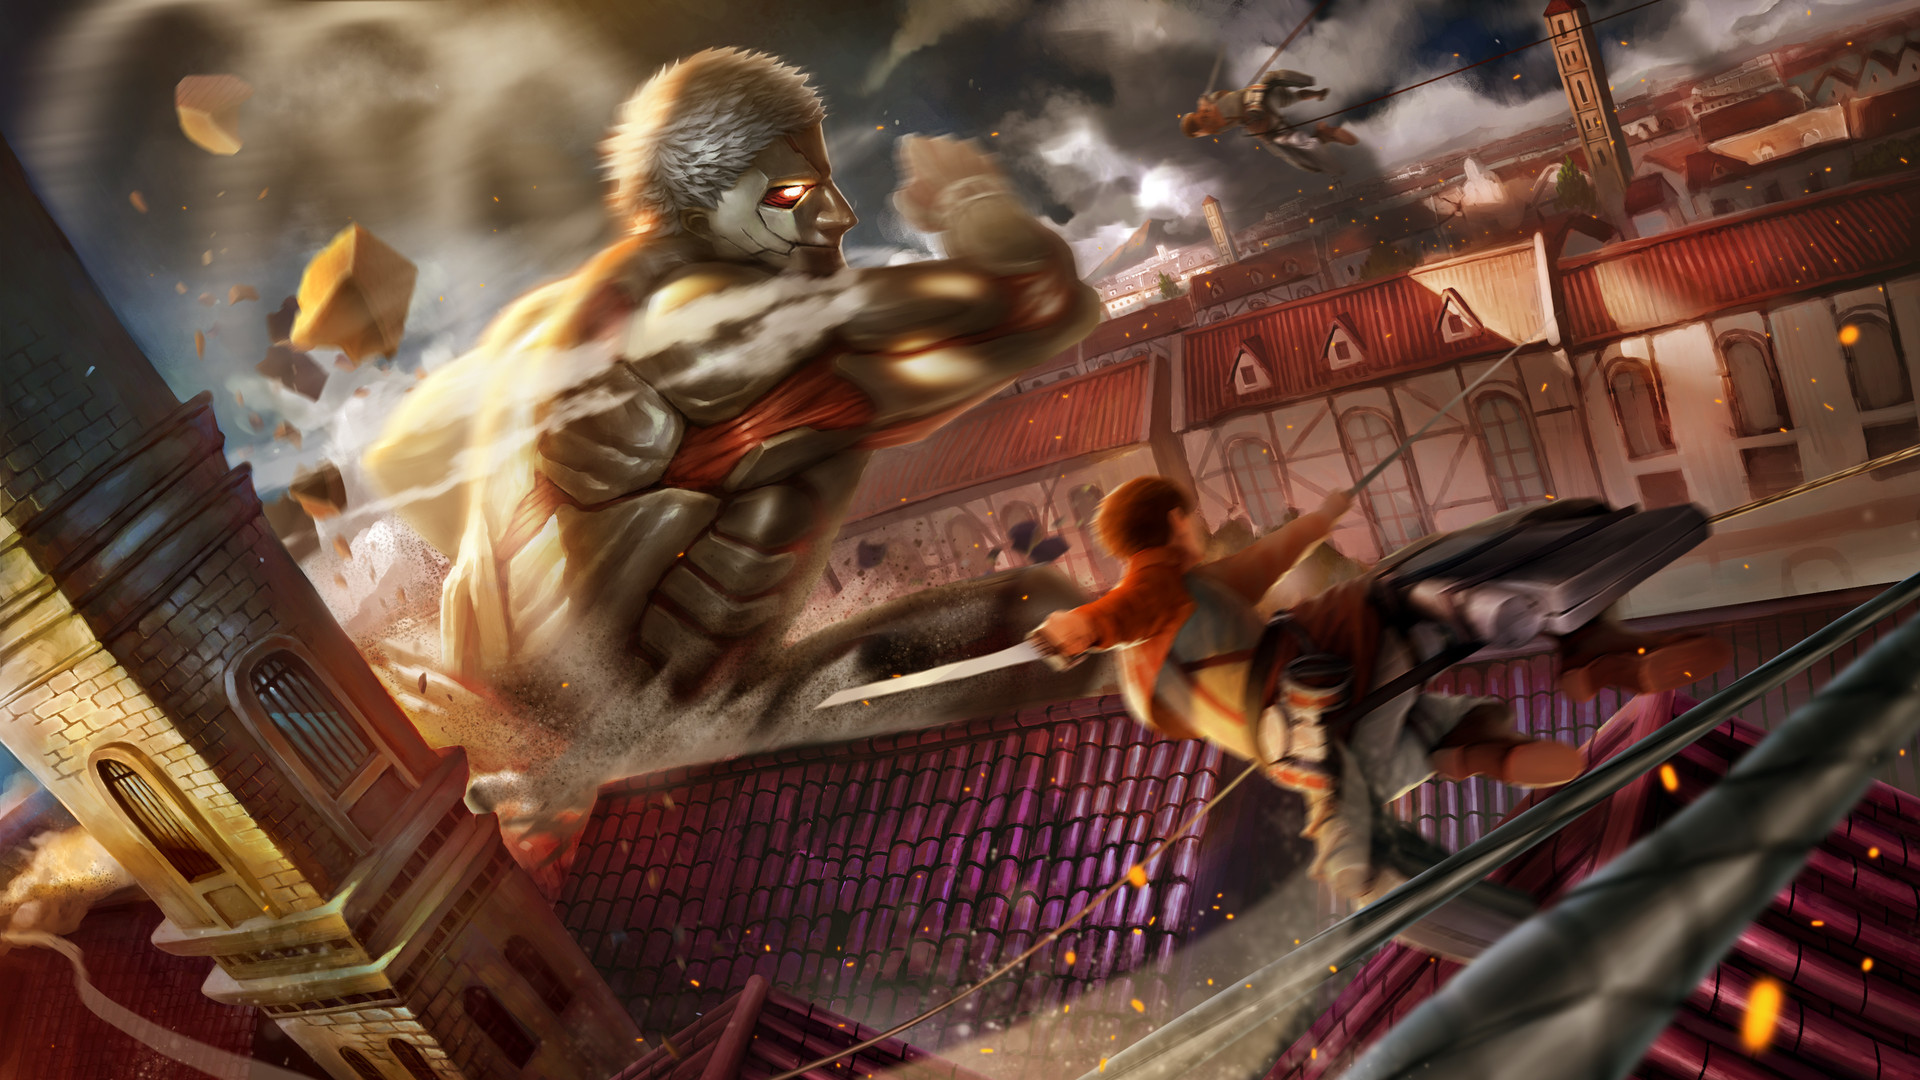 attack on titan, anime, armored titan, city, destruction, titan High Definition image